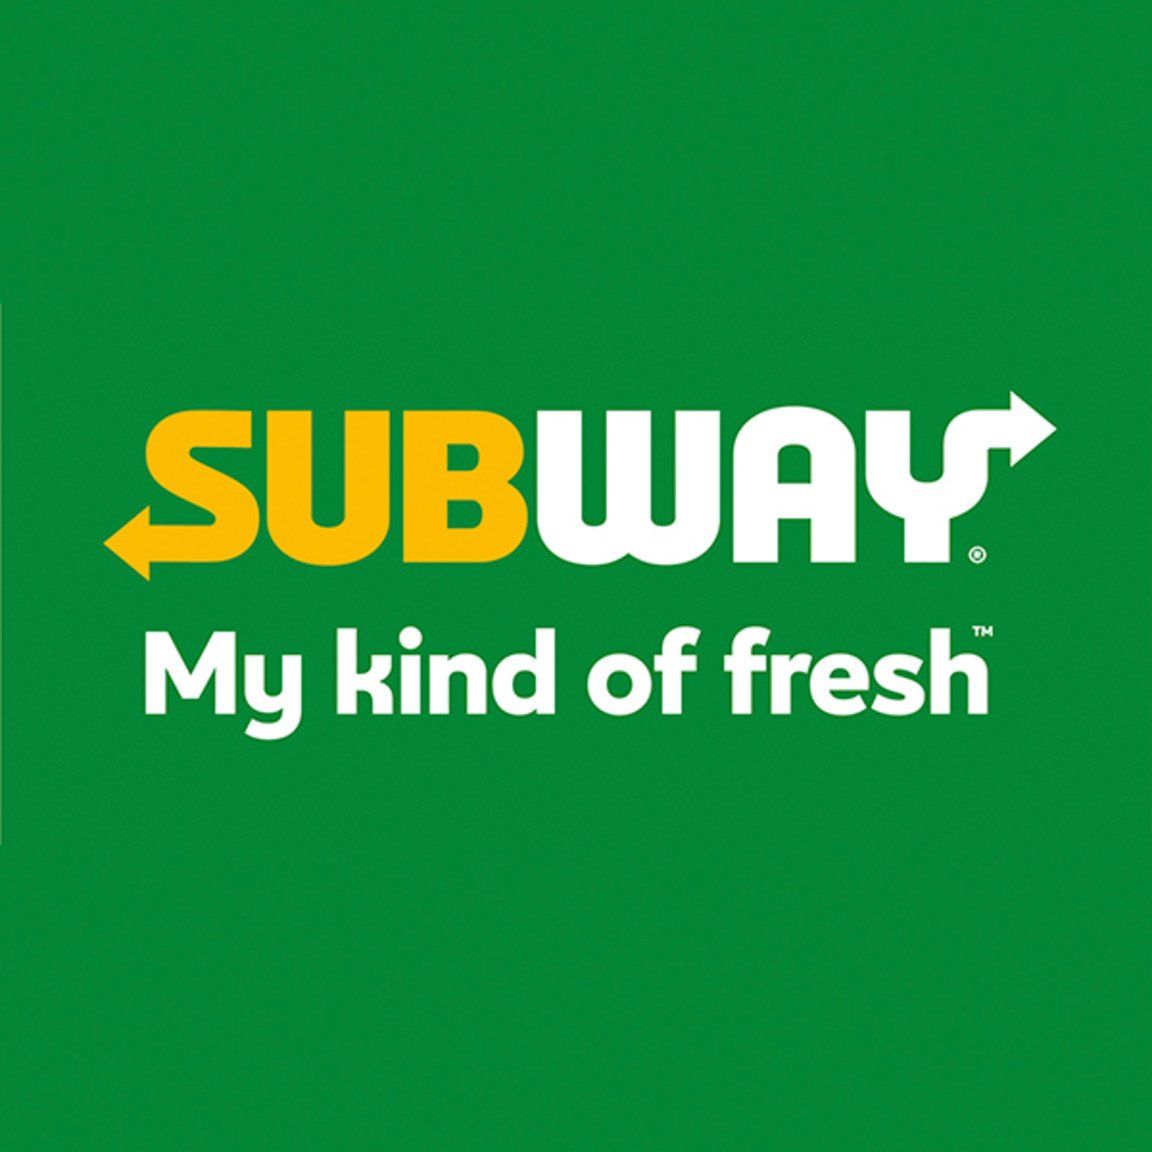 Subway